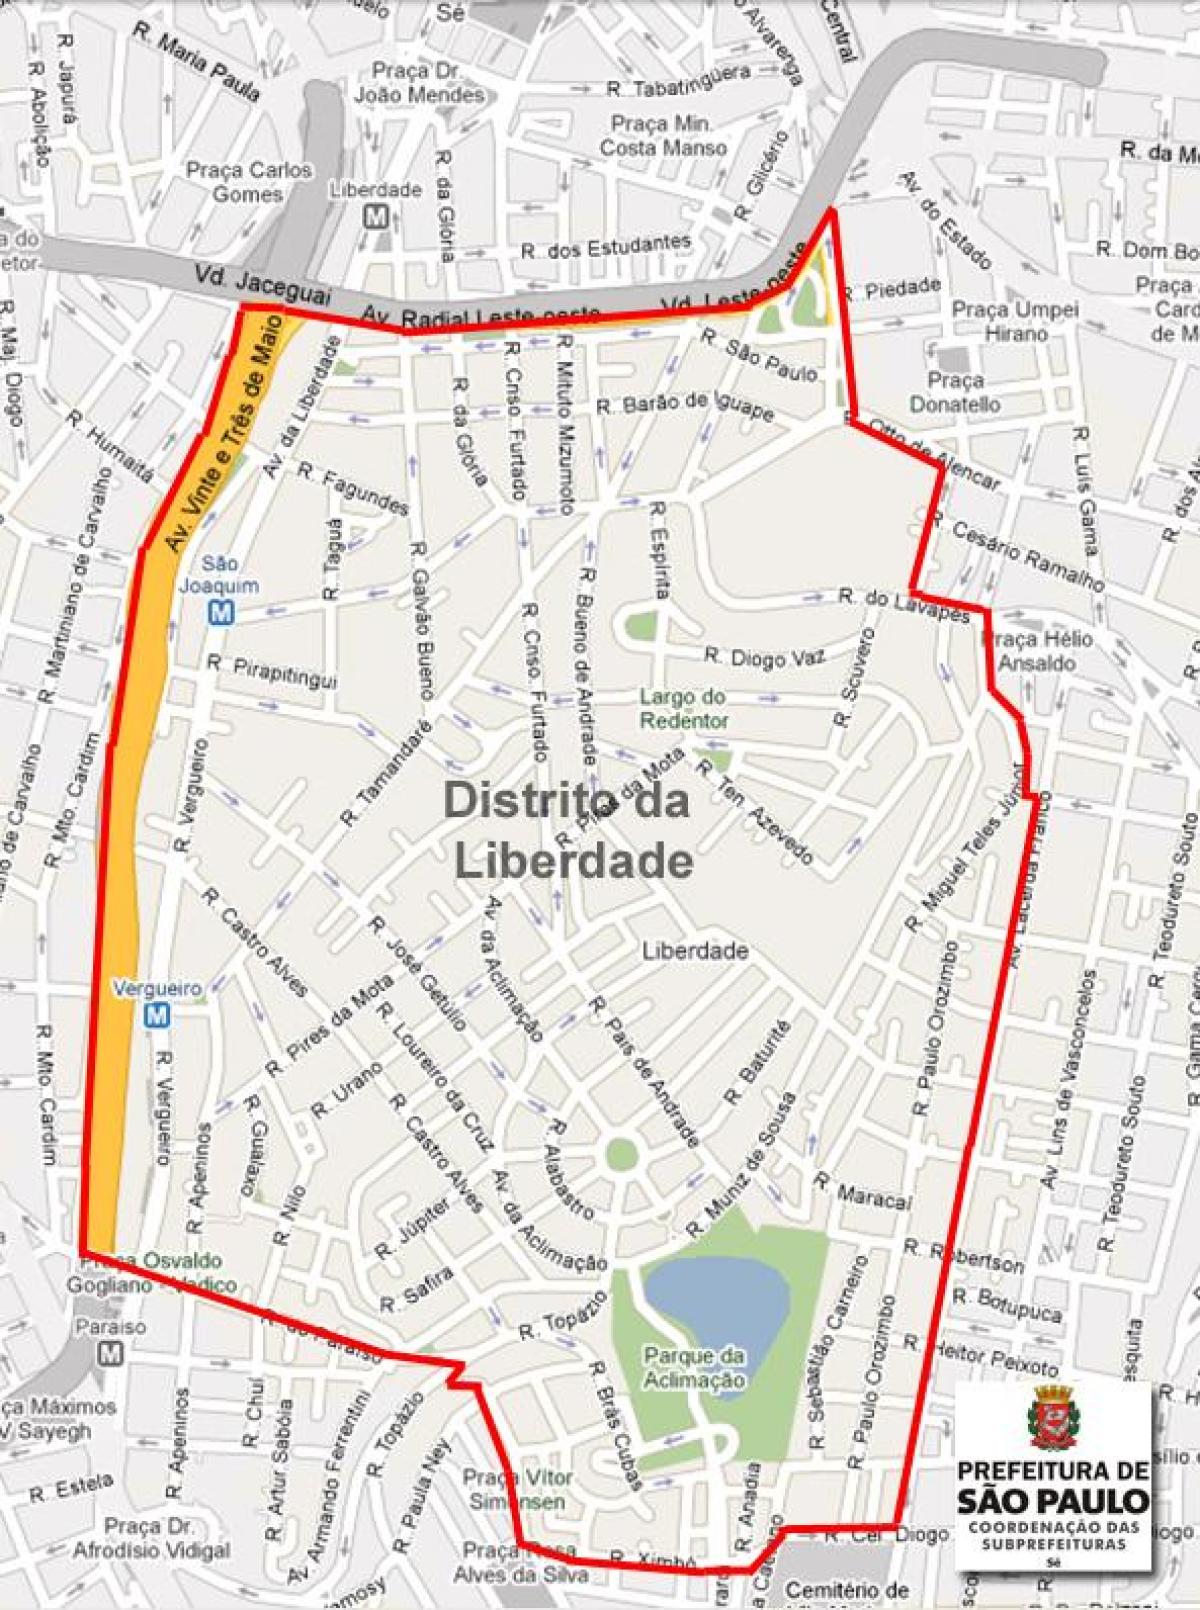 Mapa Liberdade v São Paulo